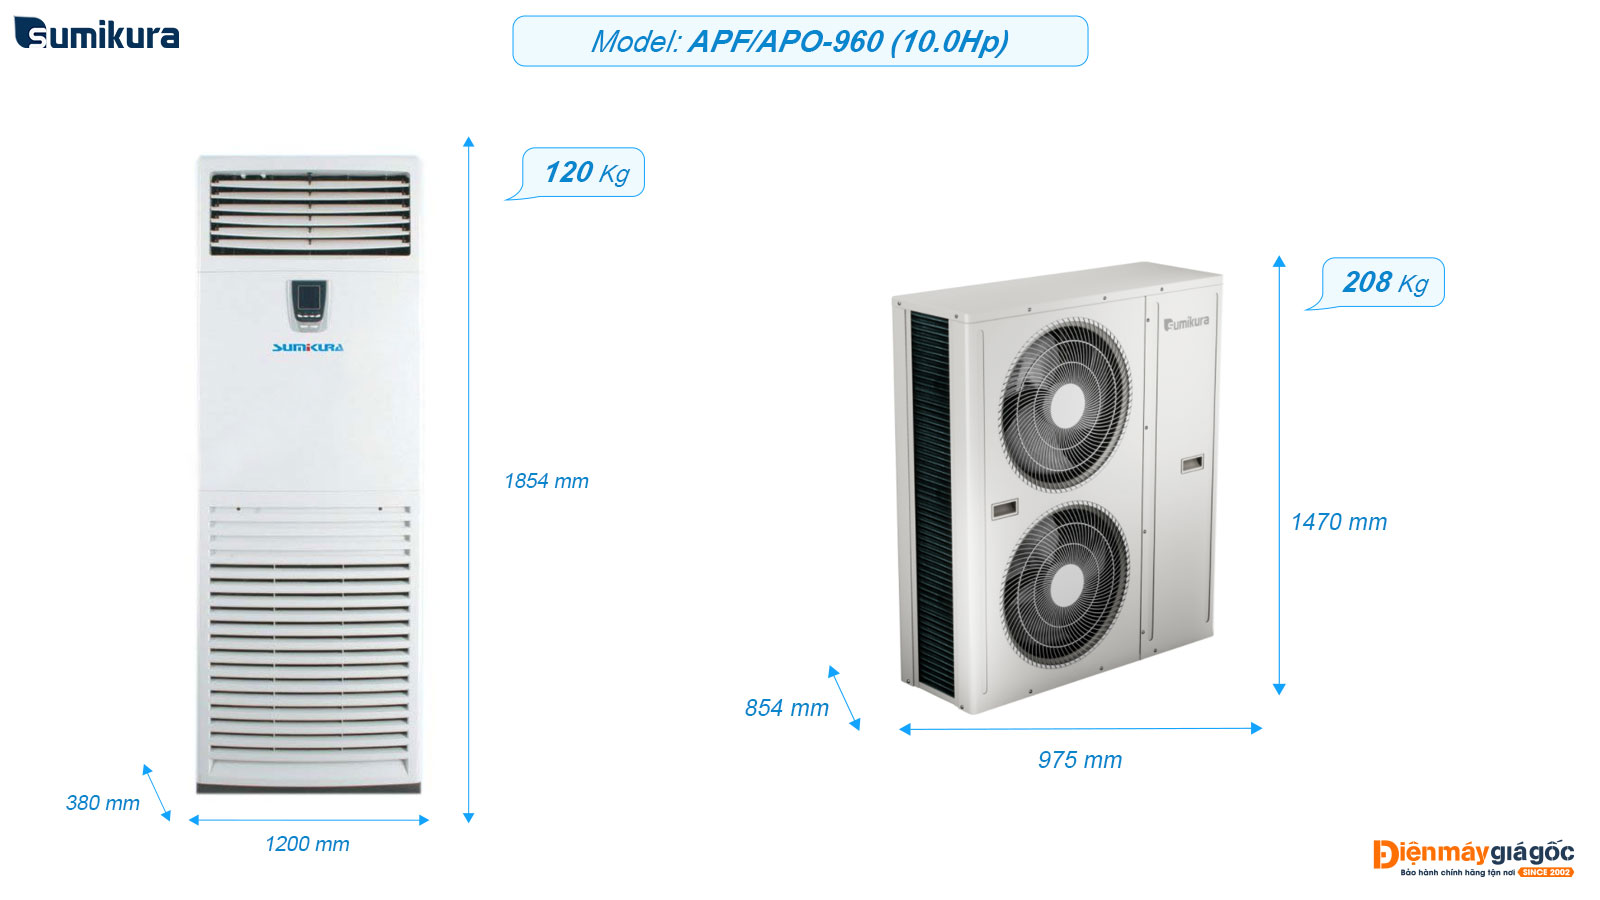 Sumikura Floor standing air conditioning APF/APO-960 (10.0Hp) Gas R-410A